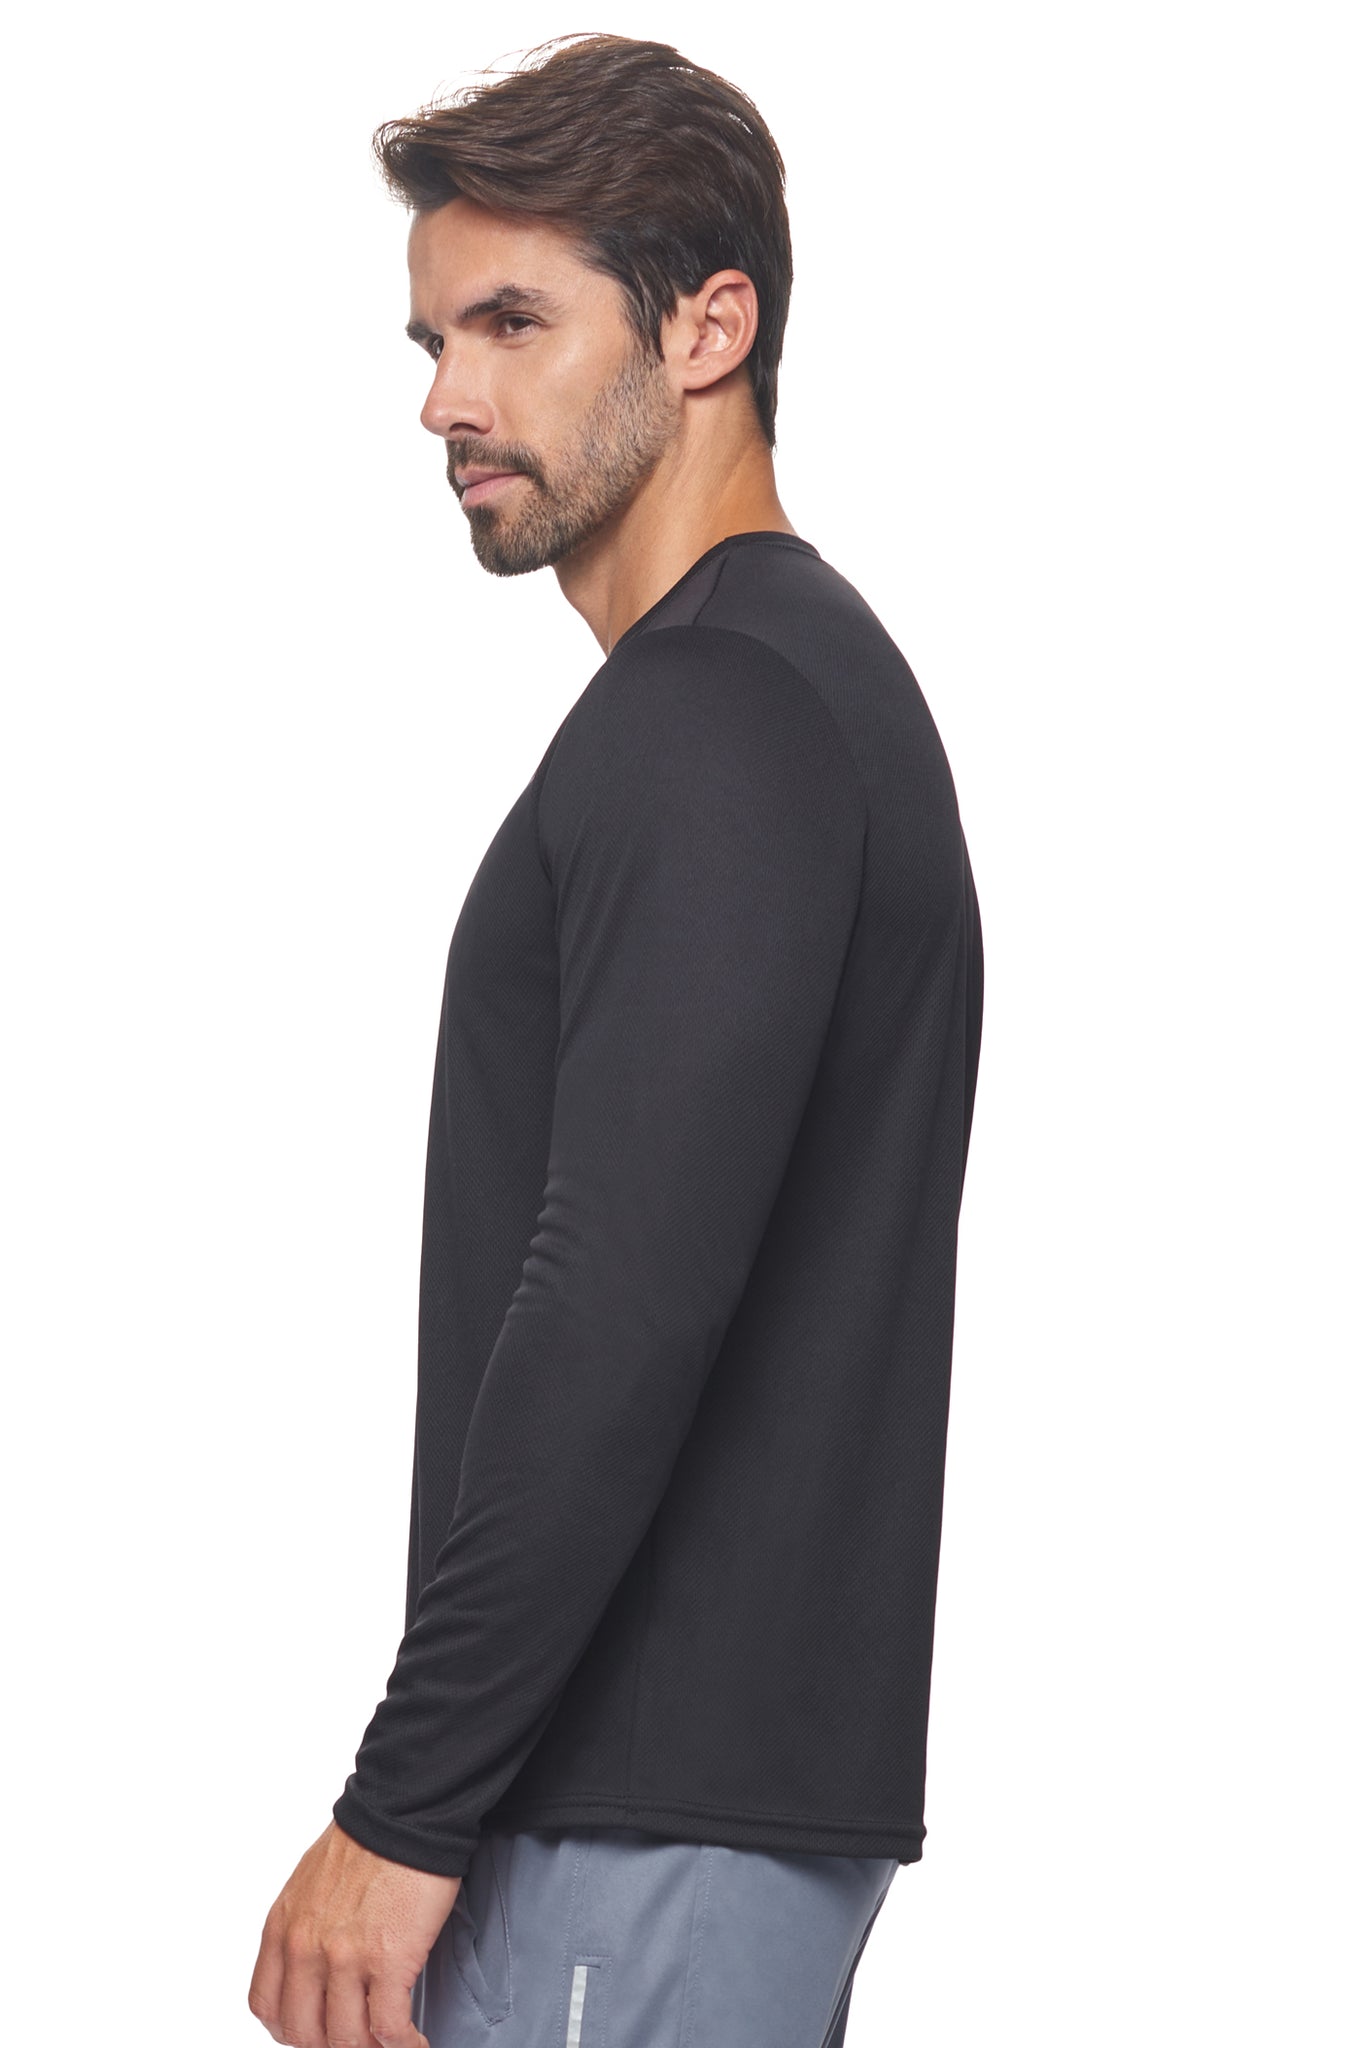 Expert Brand Wholesale Men's Oxymesh Performance Long Sleeve Tec Tee Imported AJ901 black image 2#black